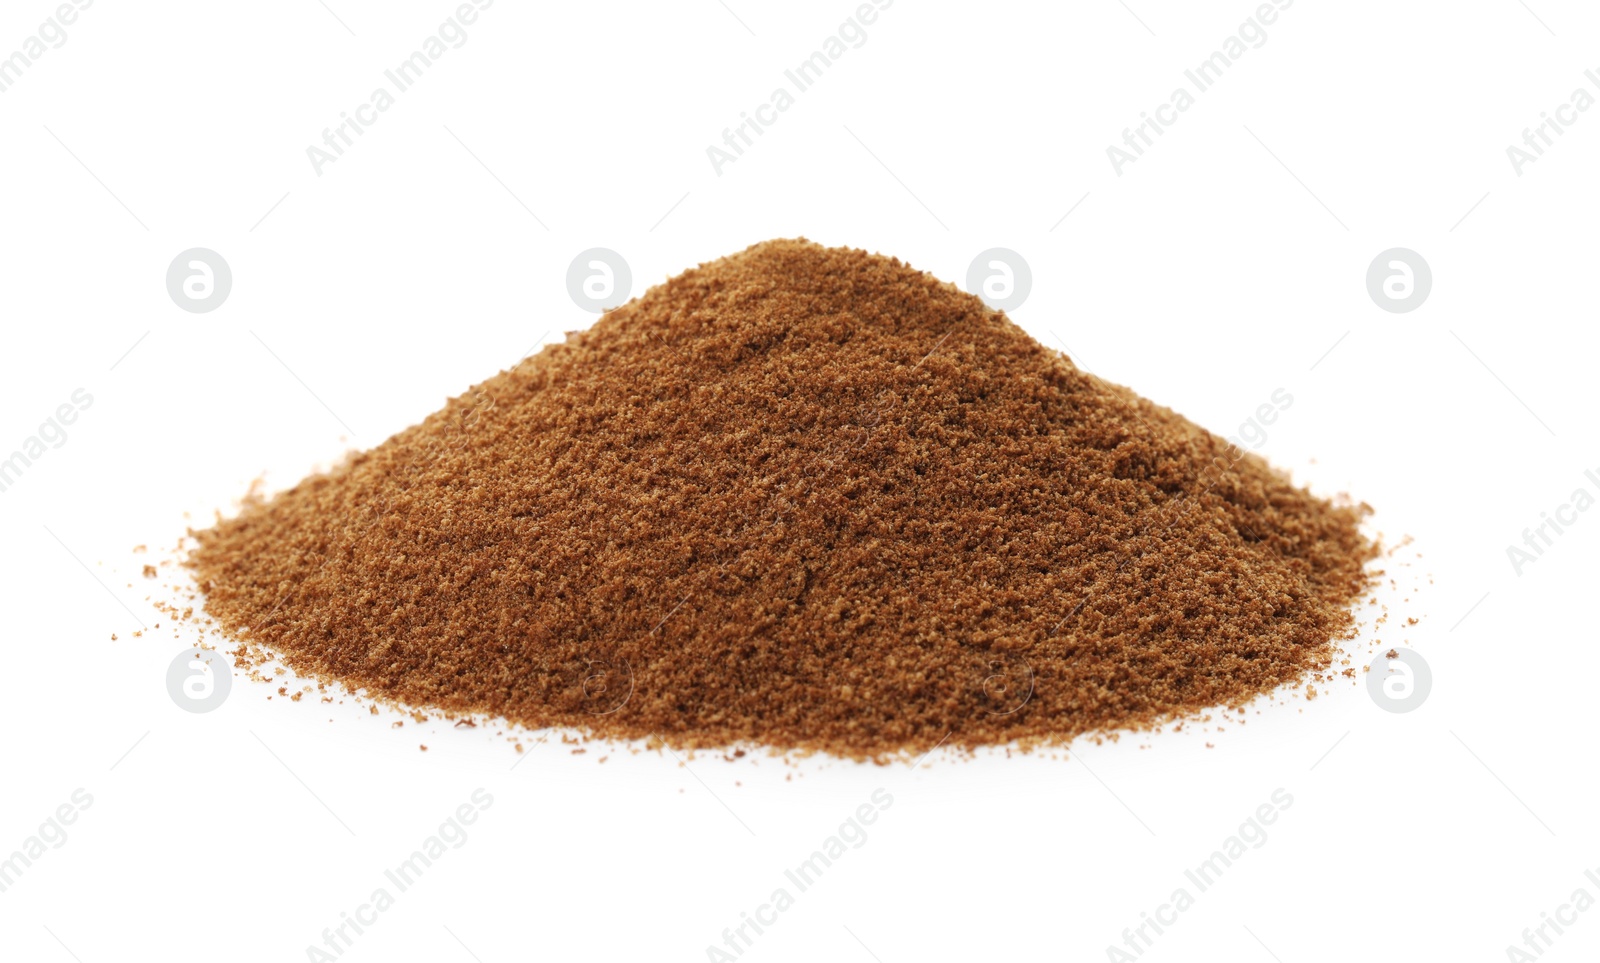 Photo of Pile of chicory powder on white background